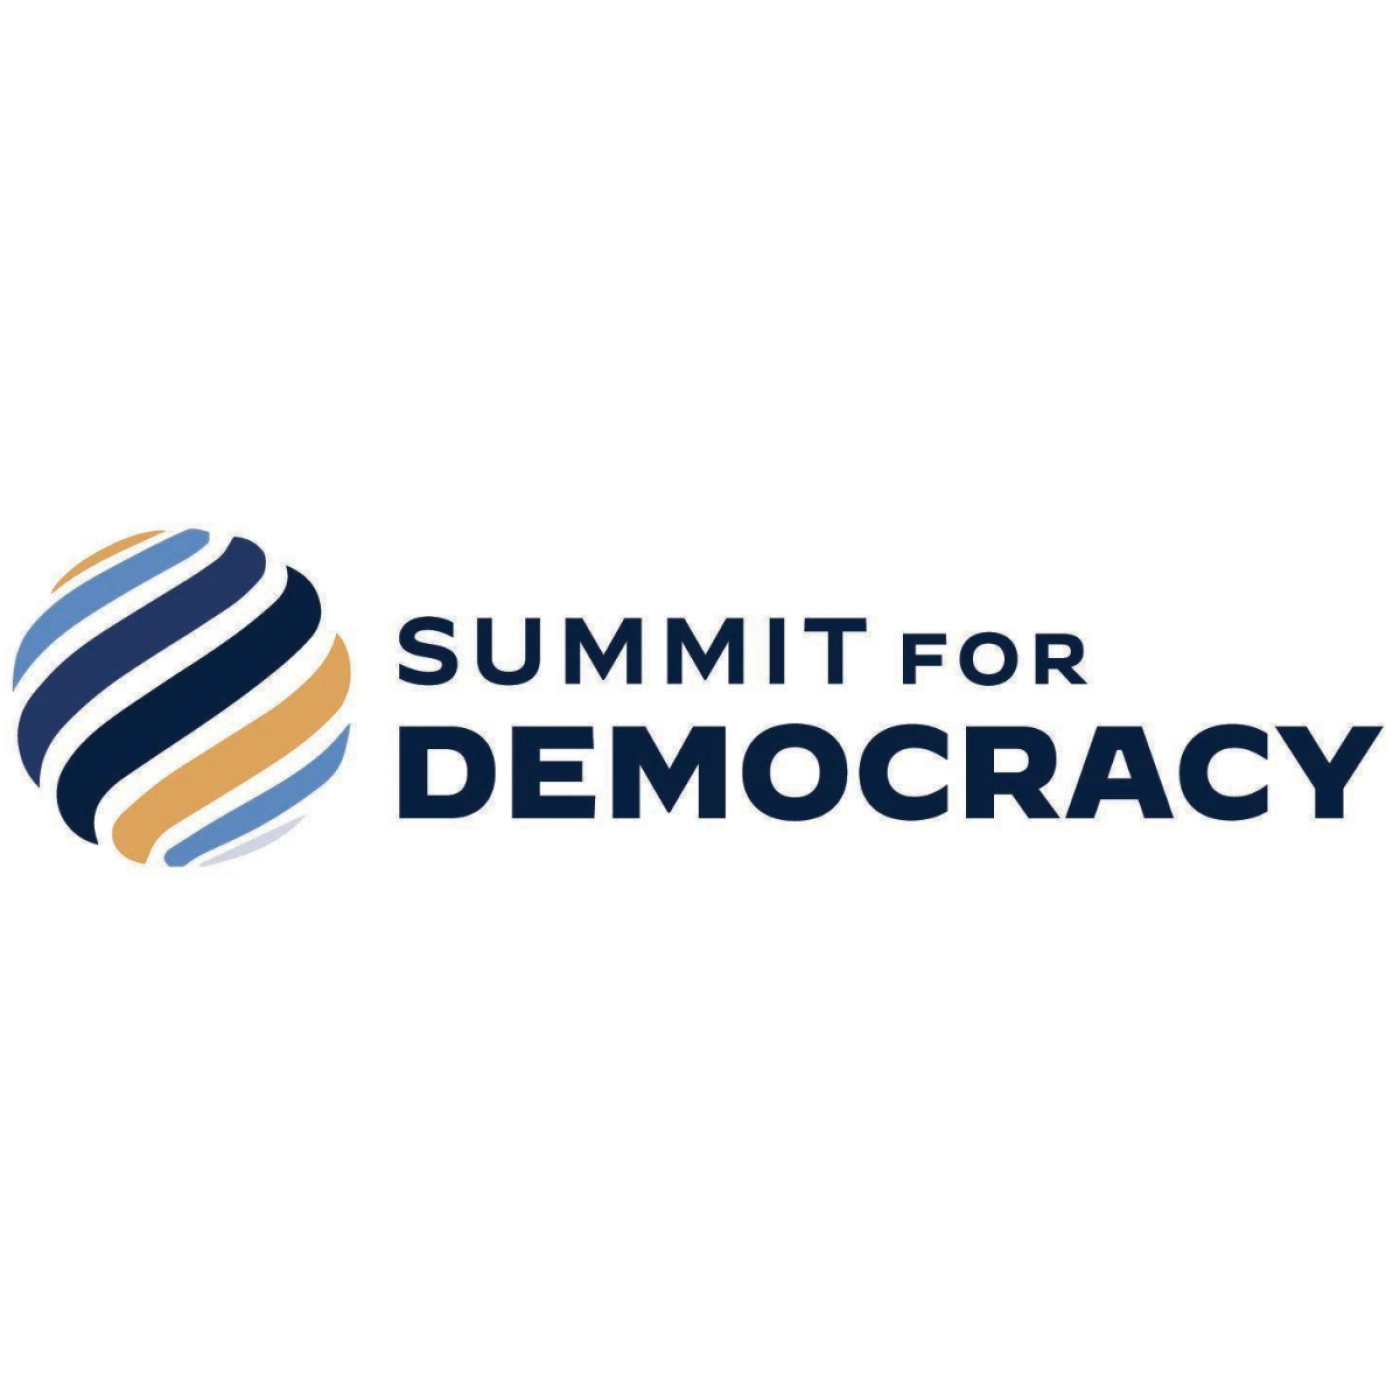 Summit for Democracy logo